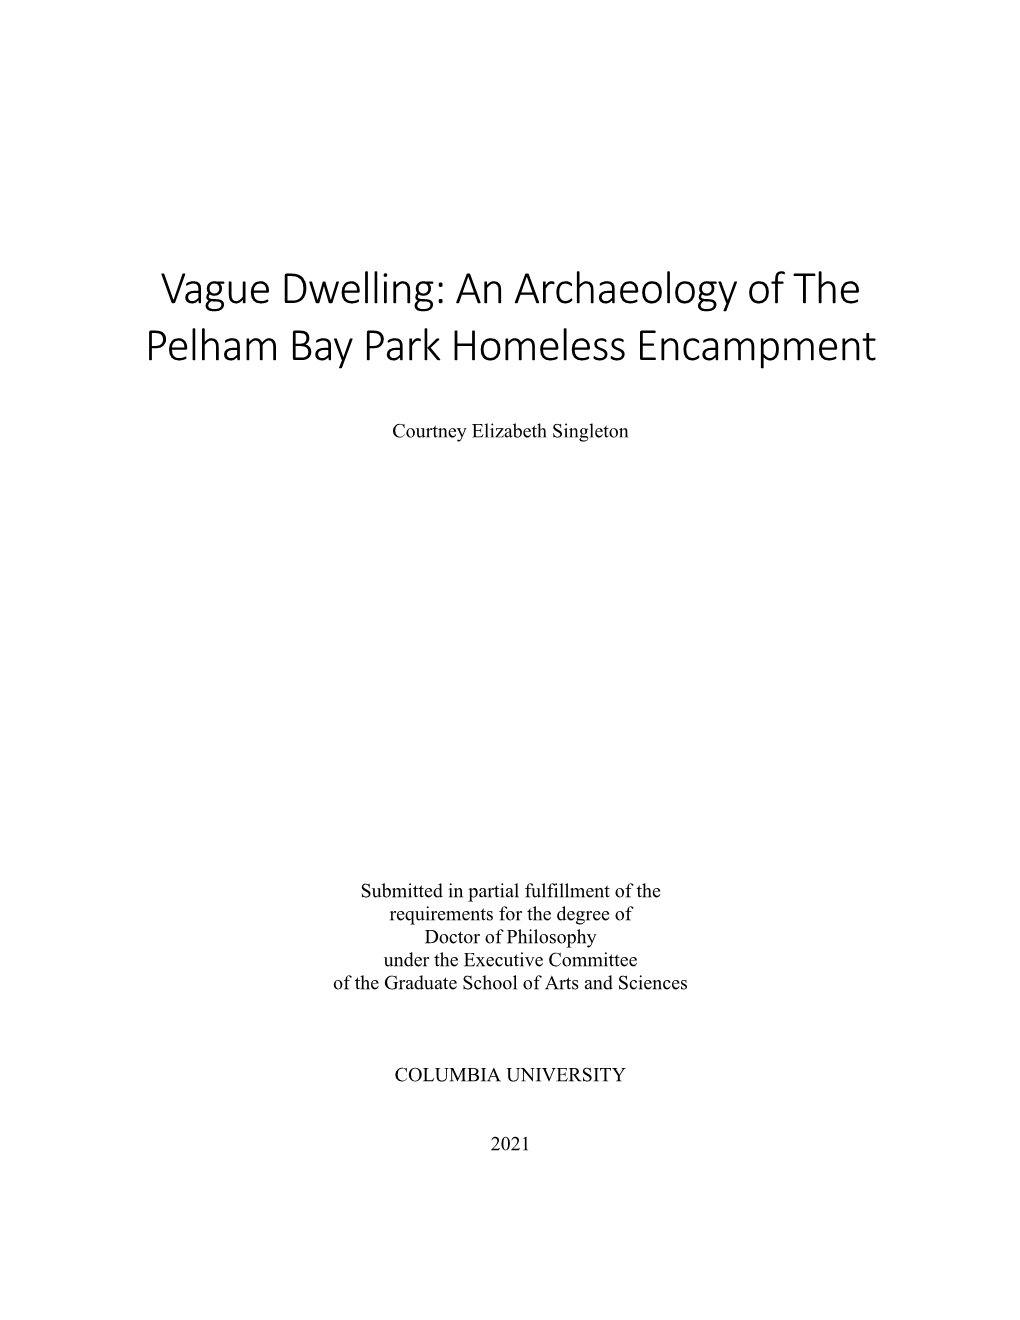 An Archaeology of the Pelham Bay Park Homeless Encampment